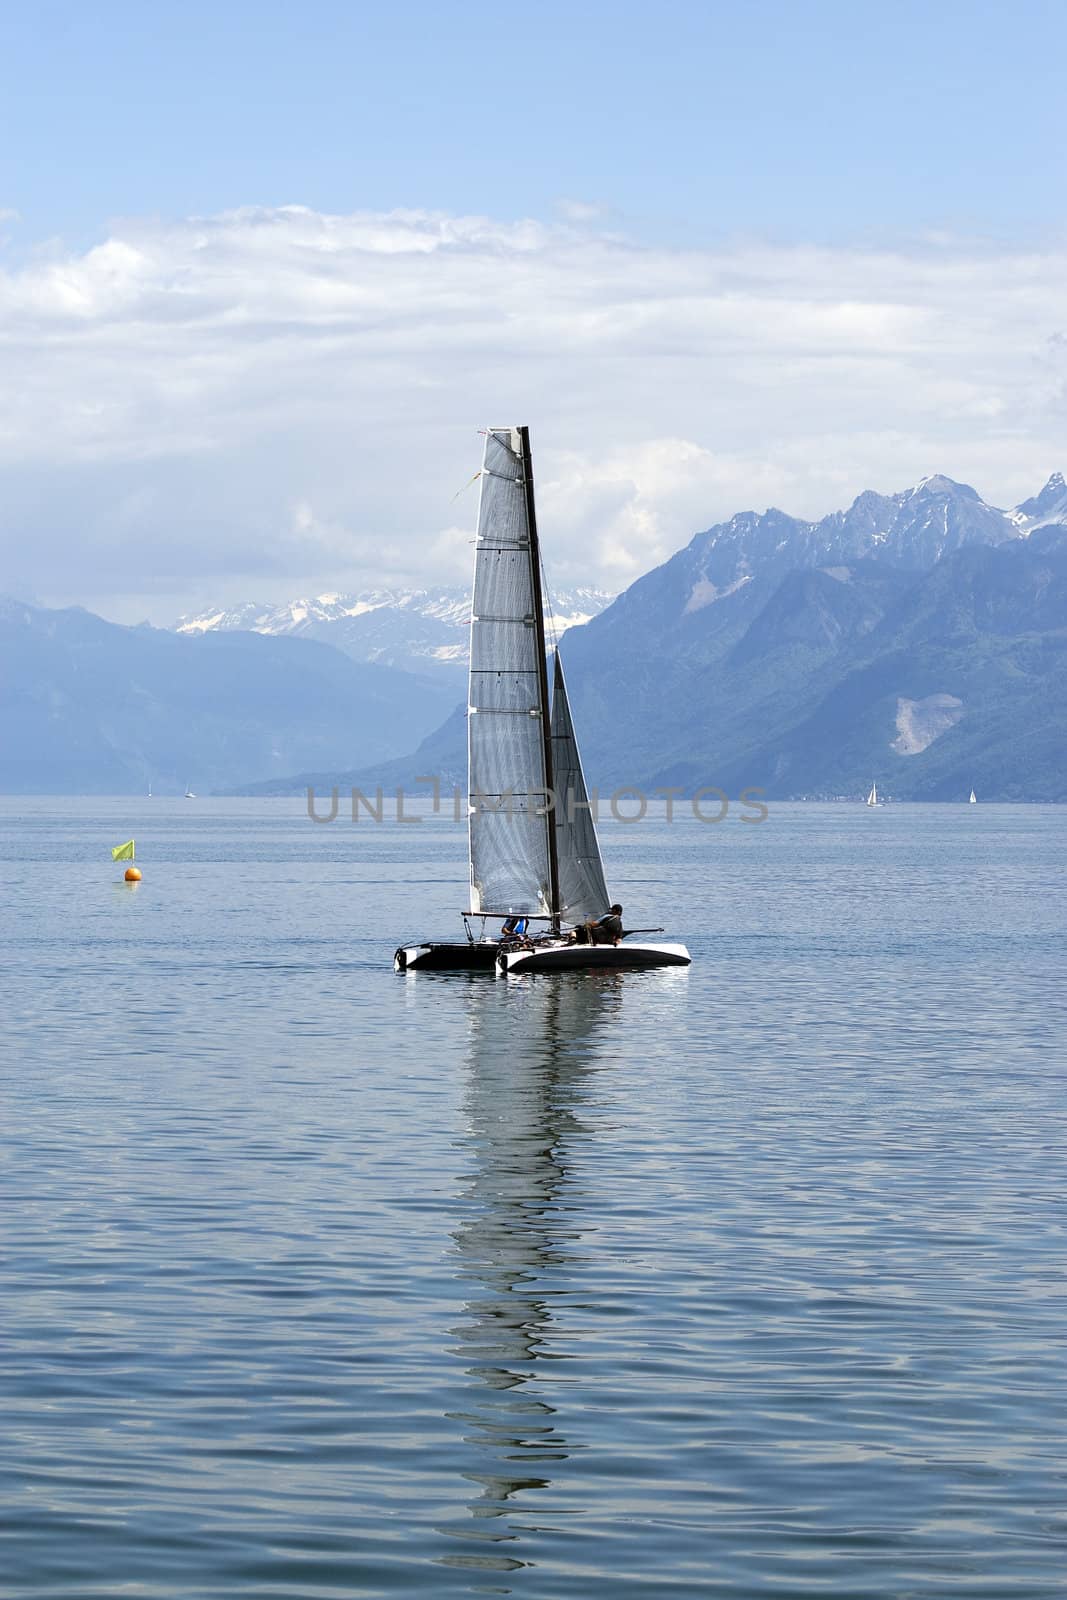 Catamaran sailing on Lake Geneva in Switzerland.